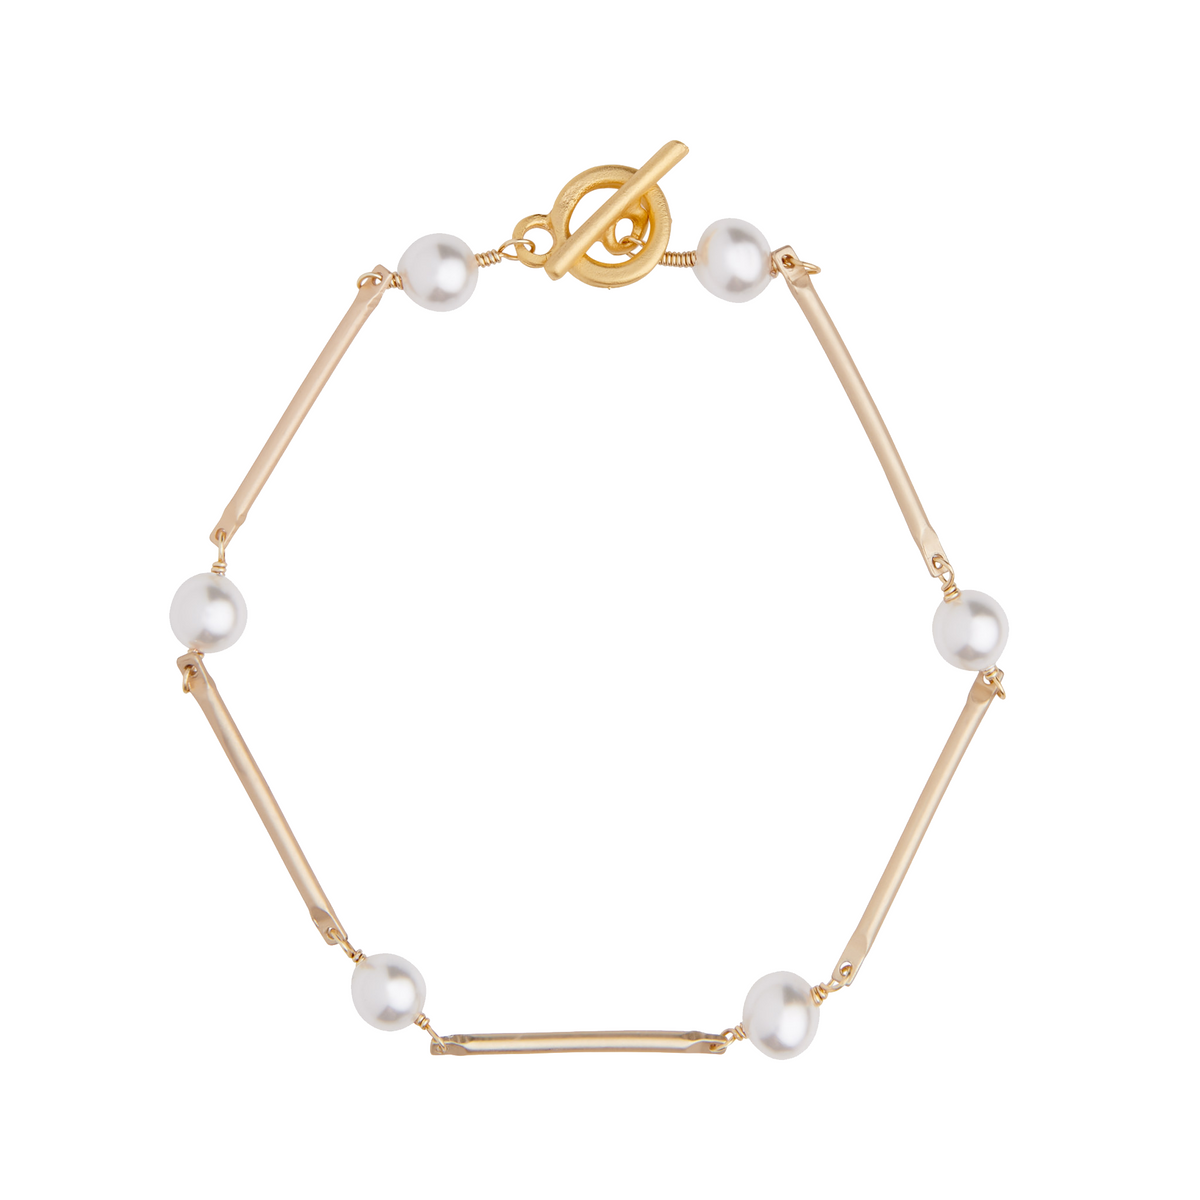 matte gold bar bracelet with white Swarovski crystal pearls by vivien walsh